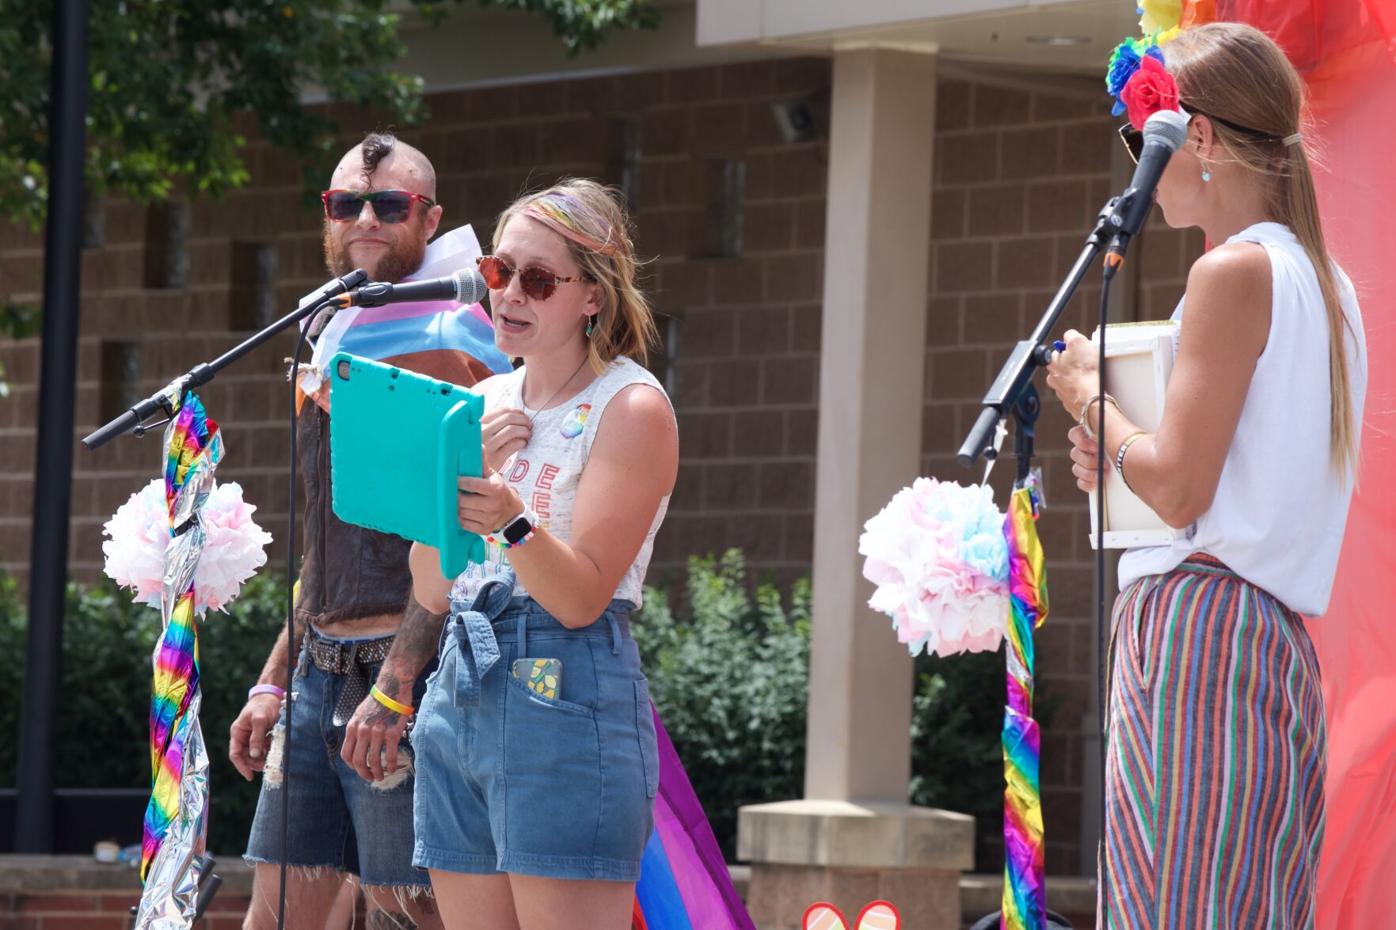 'Lititz Chooses Love' Lititz celebrates LGBTQ+ Pride on Saturday